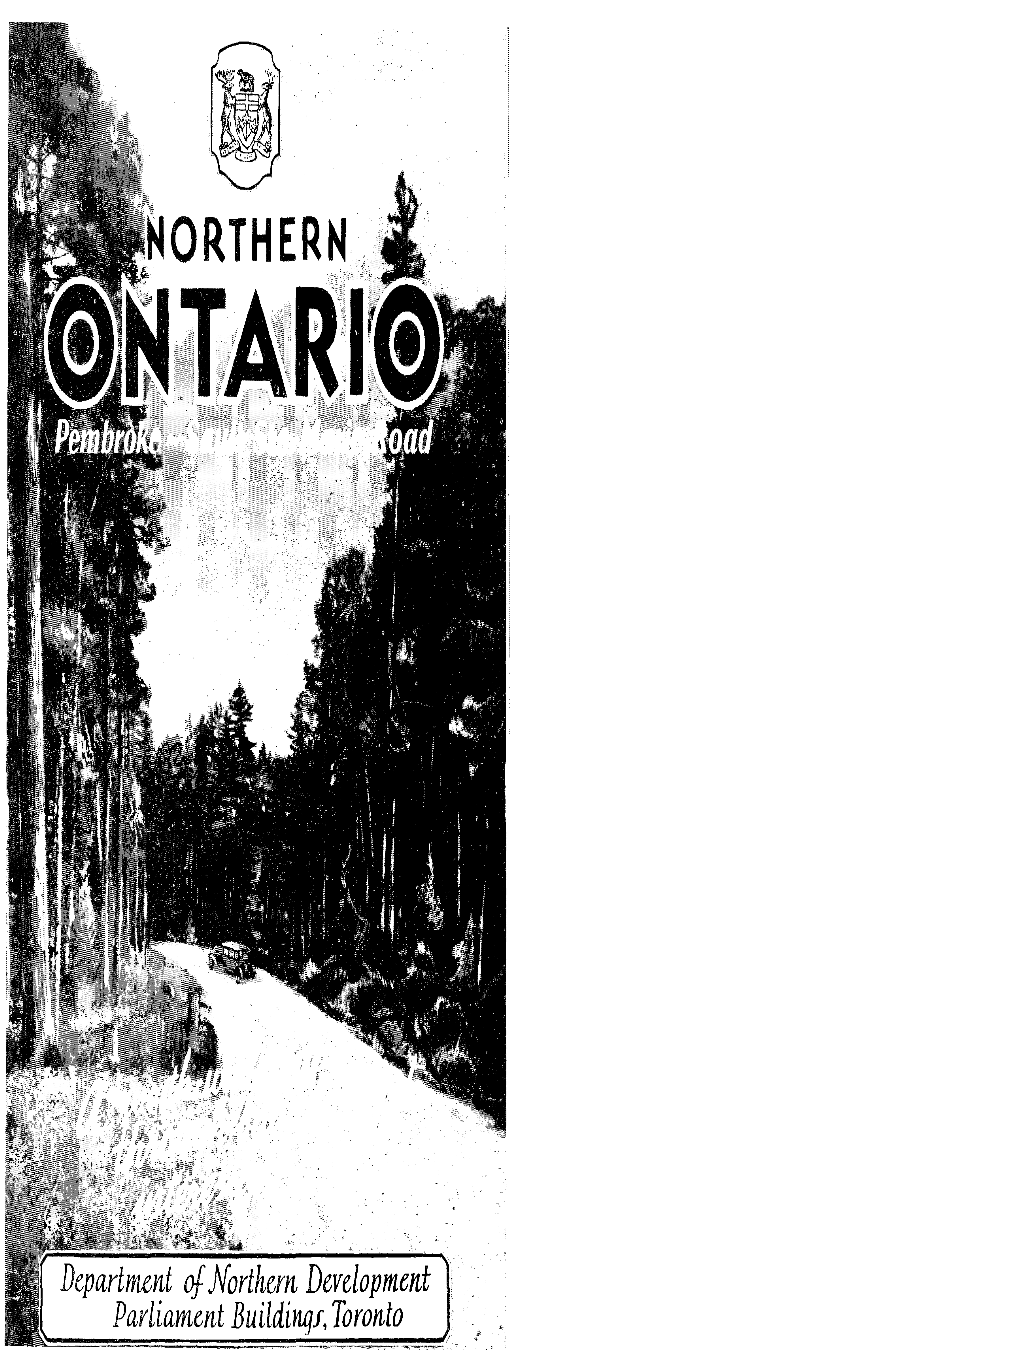 Northern Ontario Pembroke and Sault Ste Marie Road